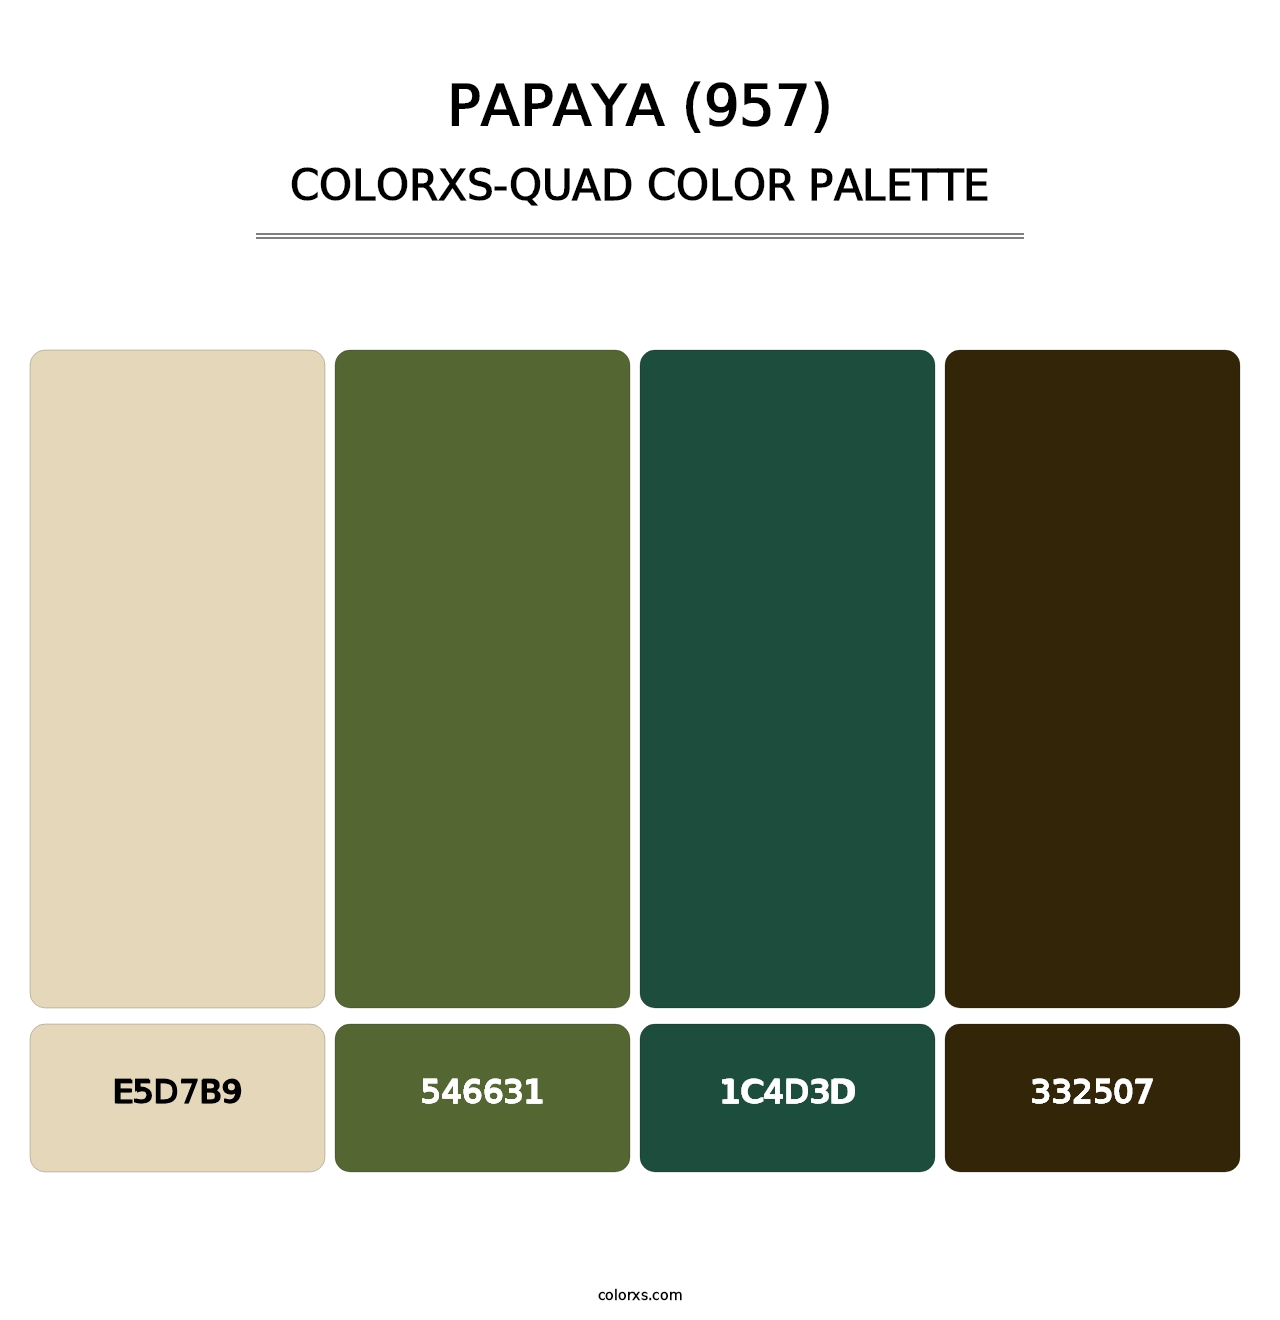 Papaya (957) - Colorxs Quad Palette